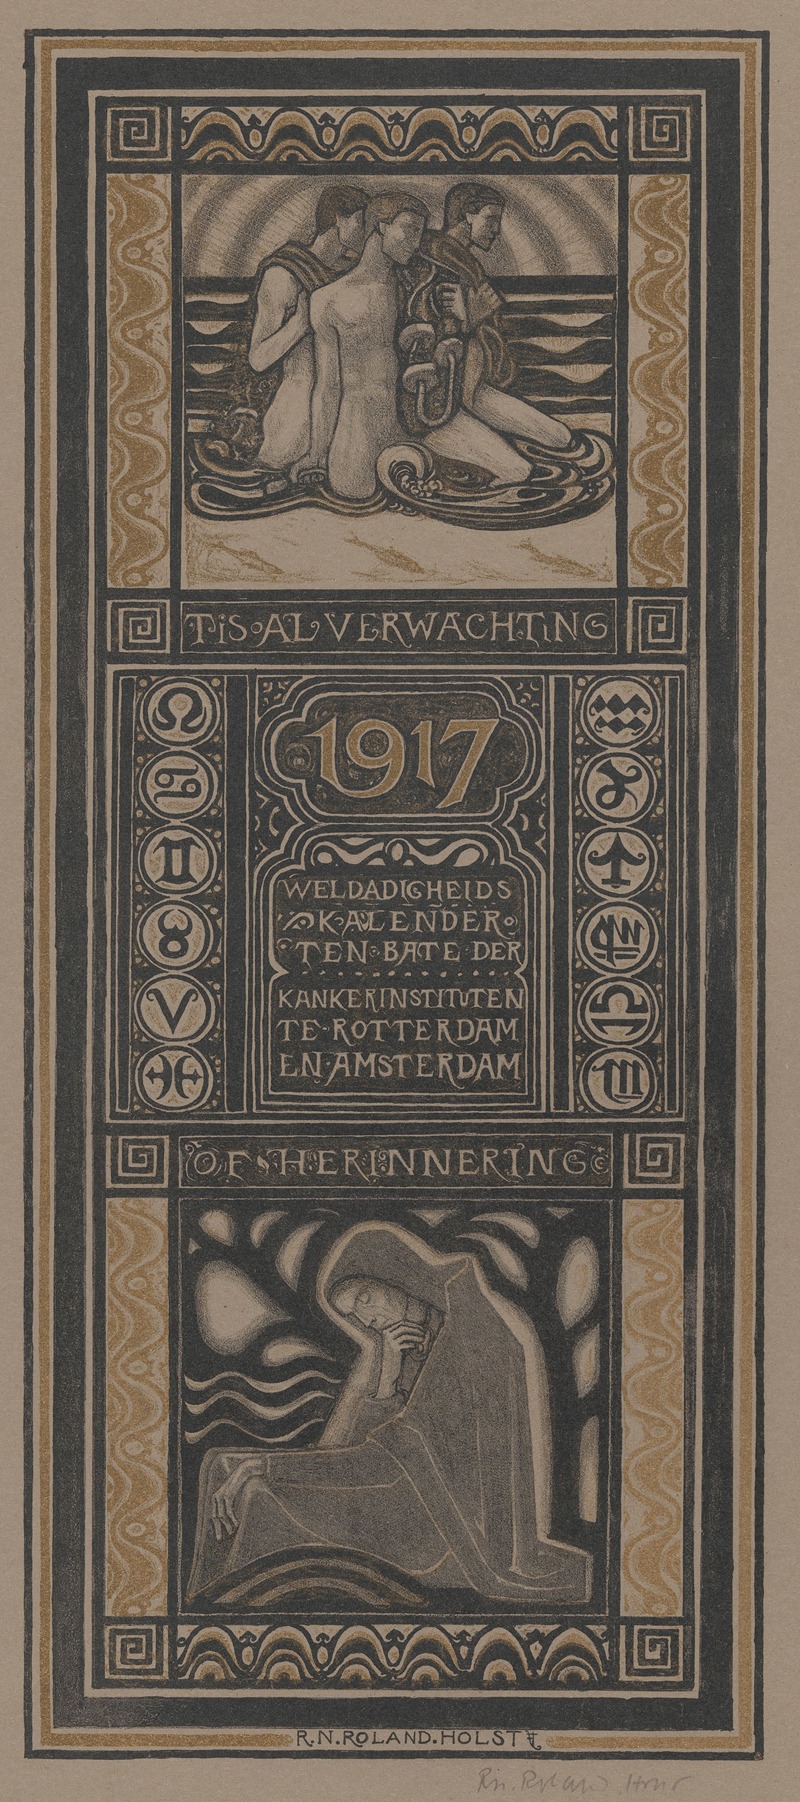 Richard Nicolaüs Roland Holst - Weldadigheidskalender voor 1917